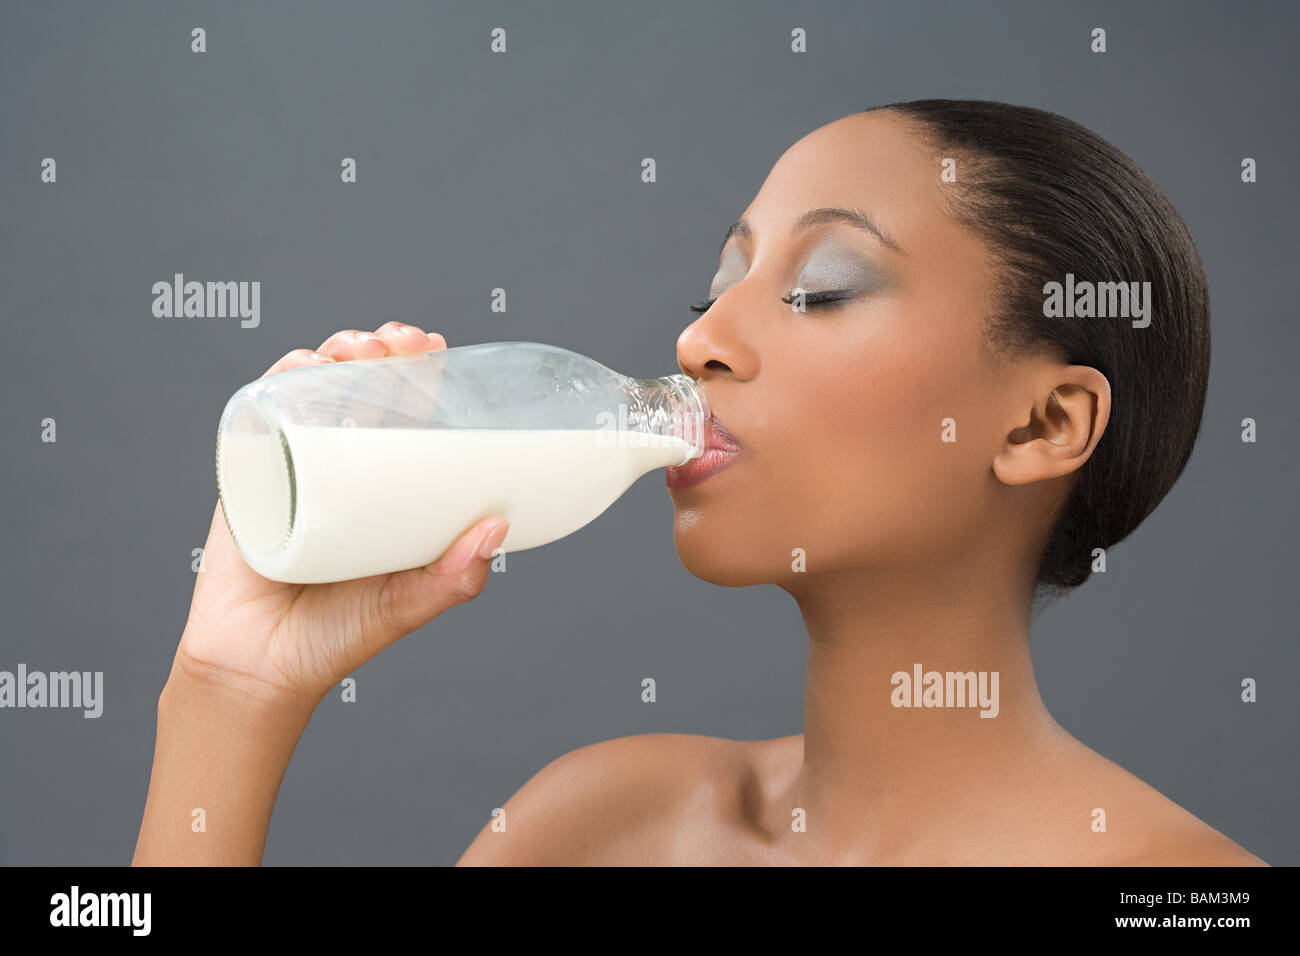 Woman drinking a bottle of milk Stock Photo